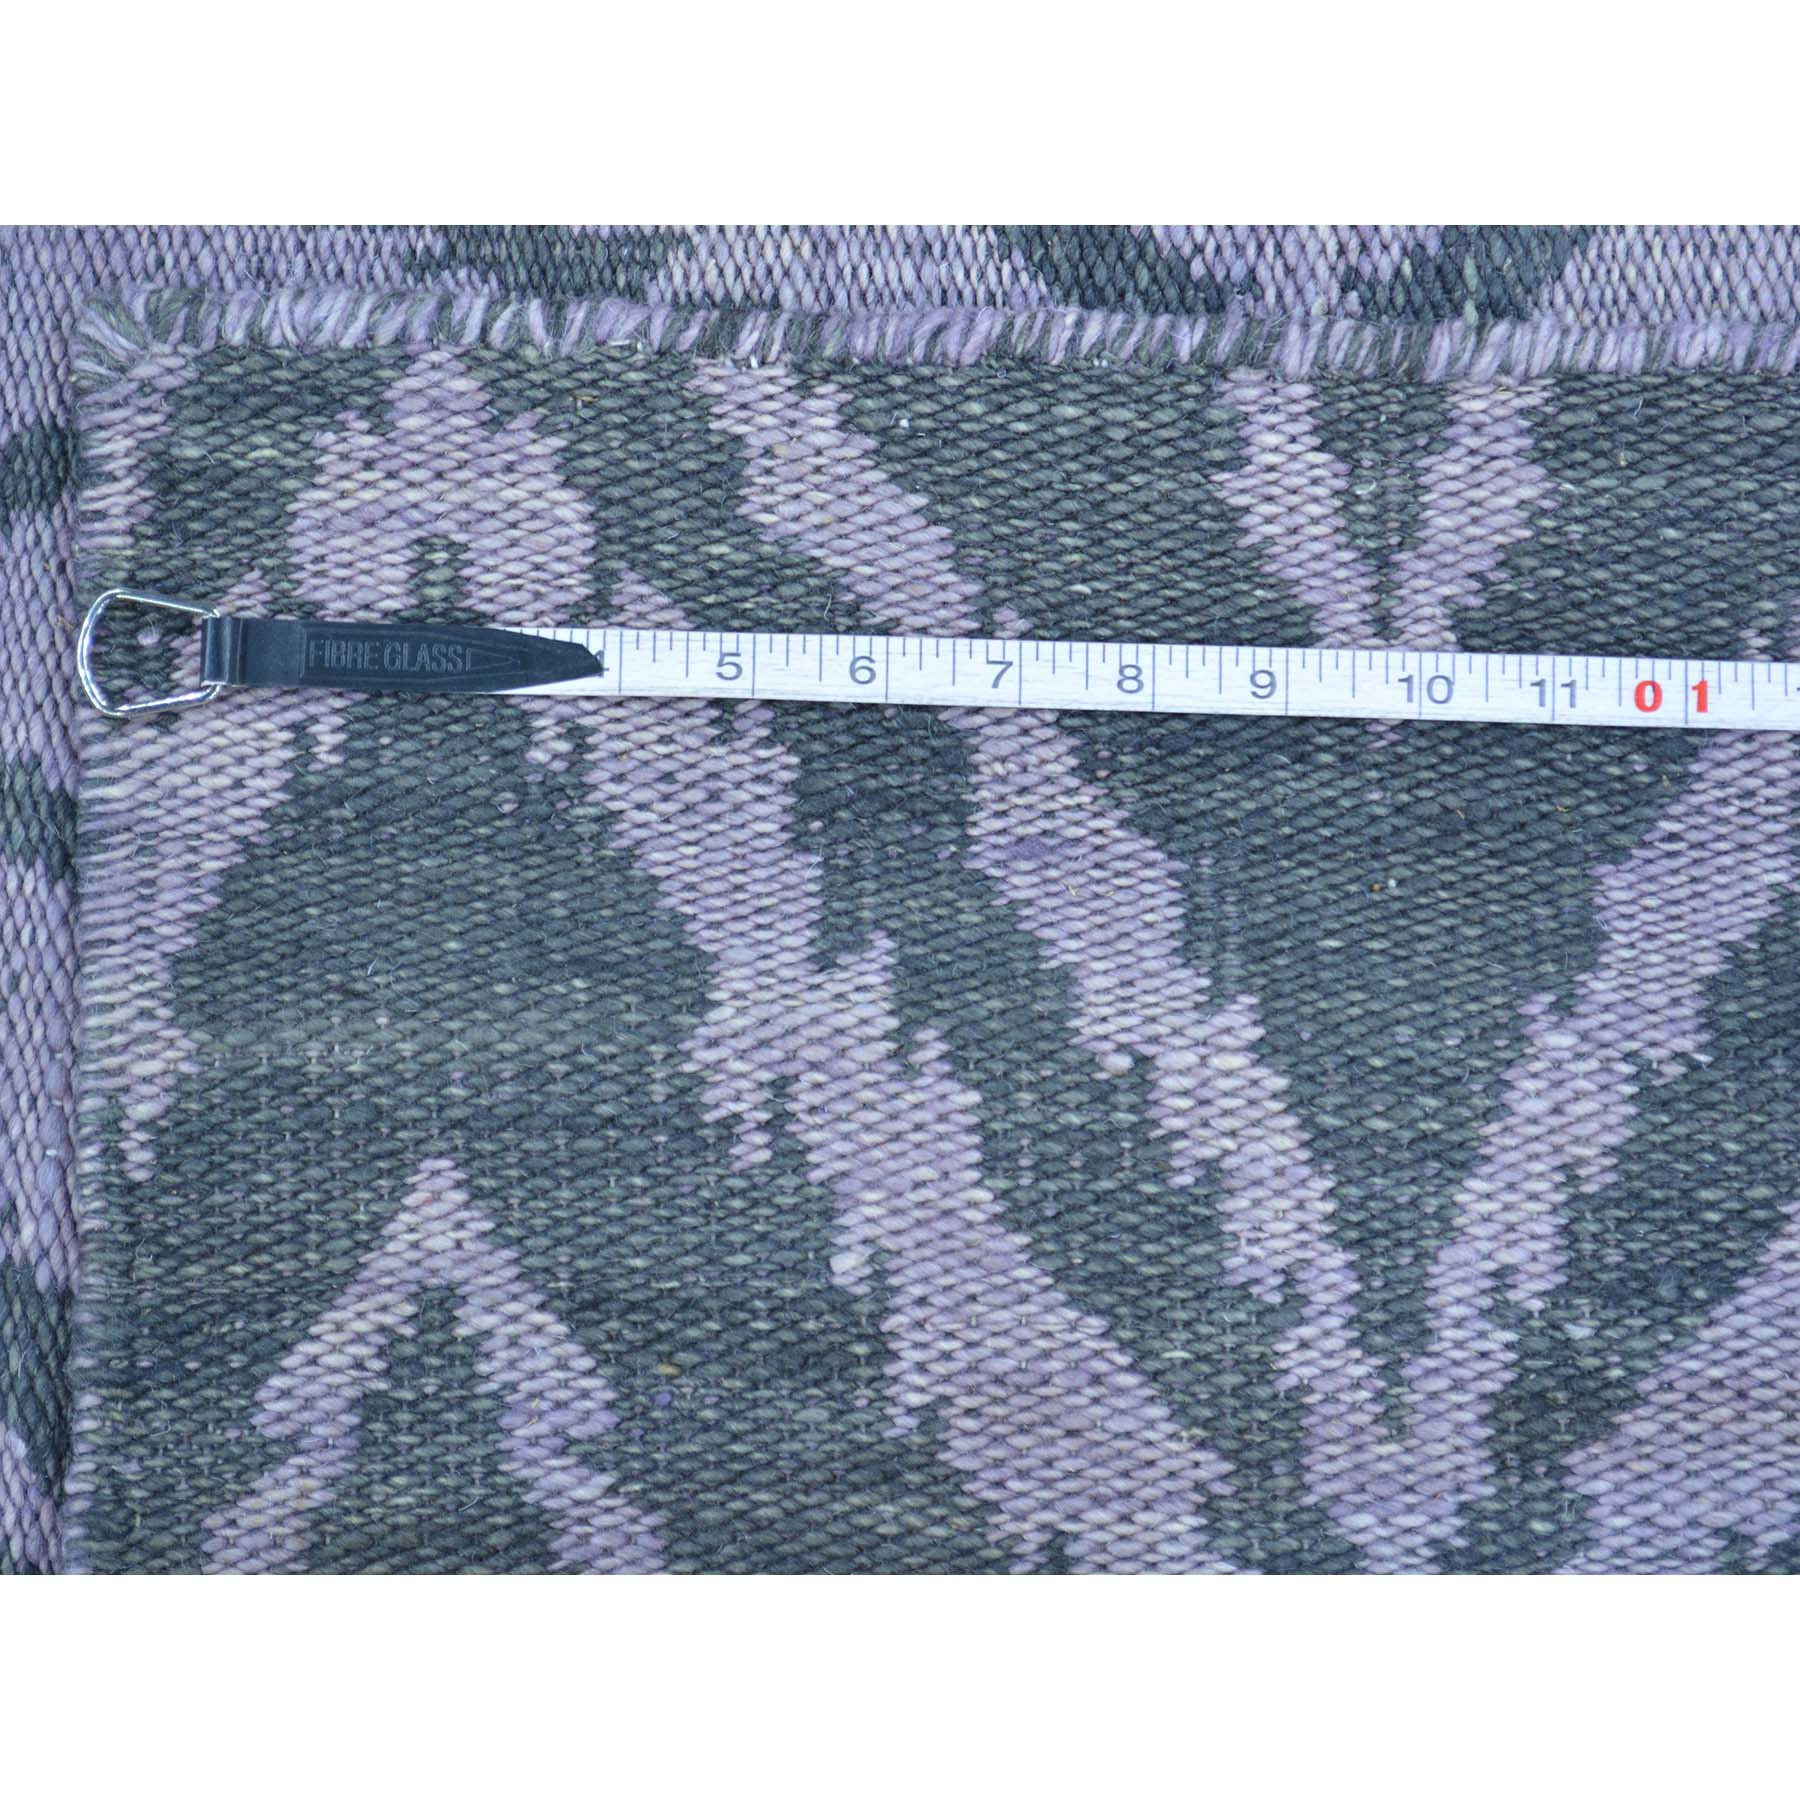 Hand Woven Flat Weave Area Rug > Design# CCSR29798 > Size: 5'-2" x 7'-5"